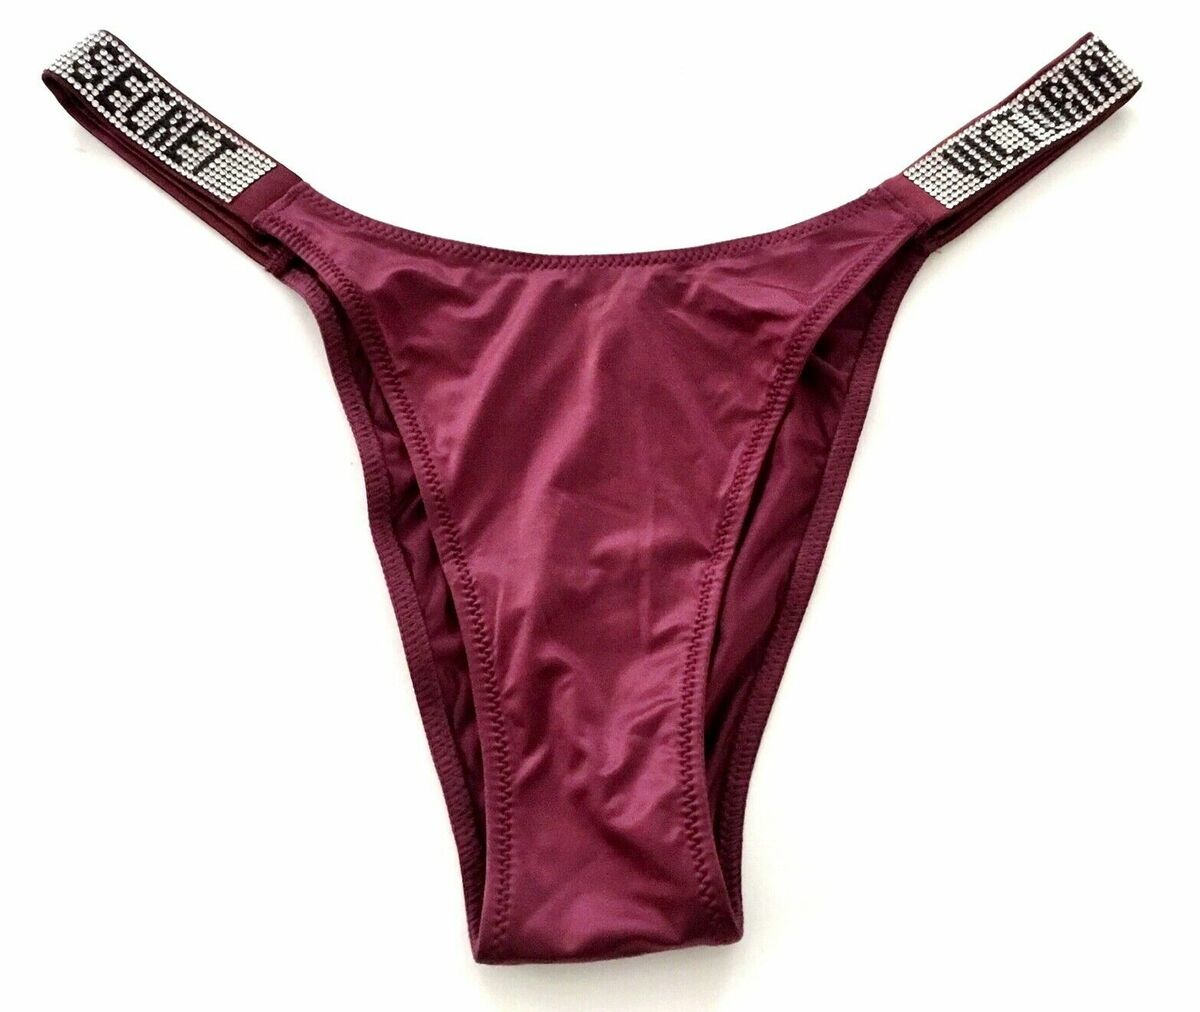 Victoria's Secret: MAJOR NEWS: 7 for $28.50 panties starts